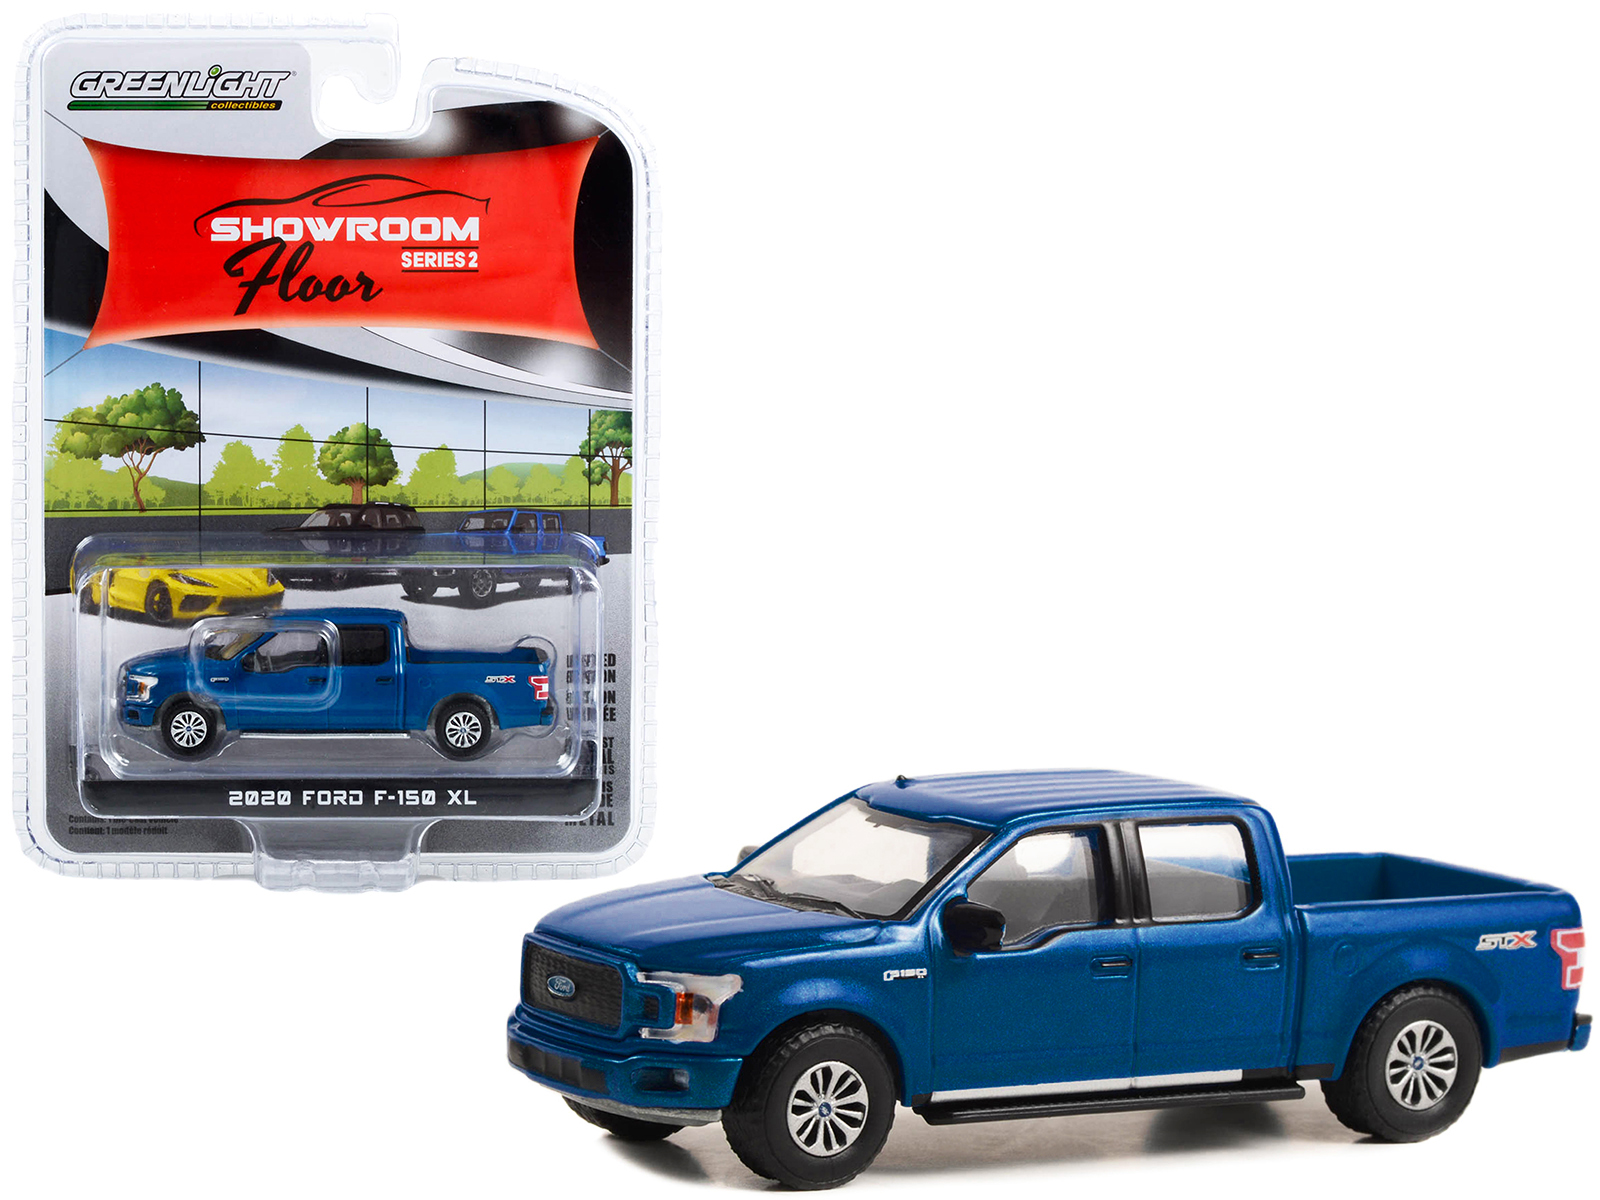 GreenLight 2020 Ford F-150 XL STX Package Pickup Truck Velocity Blue "Showroom Floor" Series 2 1/64 Diecast Model Car by Greenlight